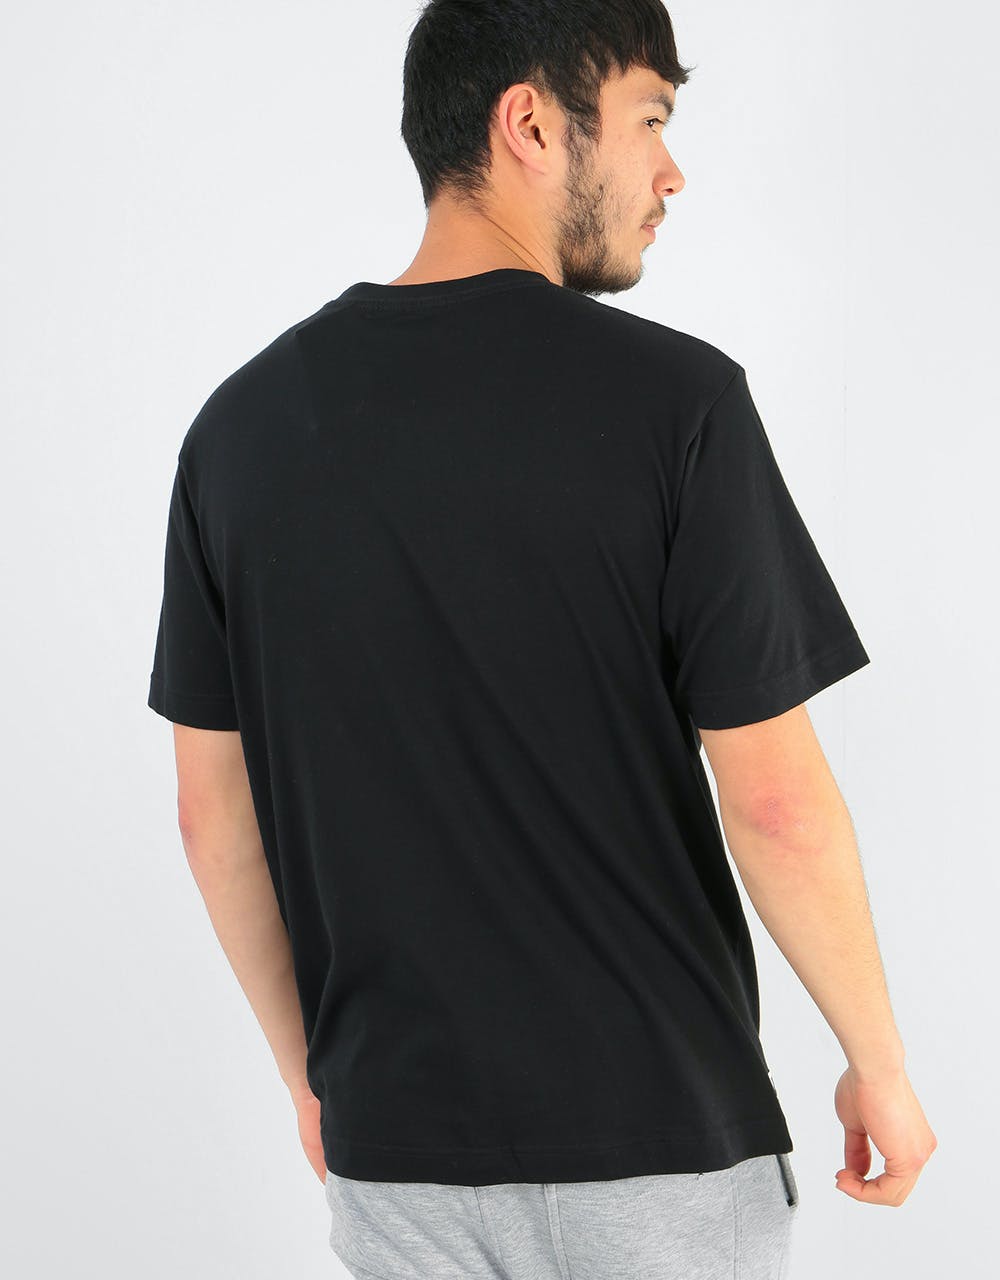 Zoo York Ninety 3T-Shirt - Black